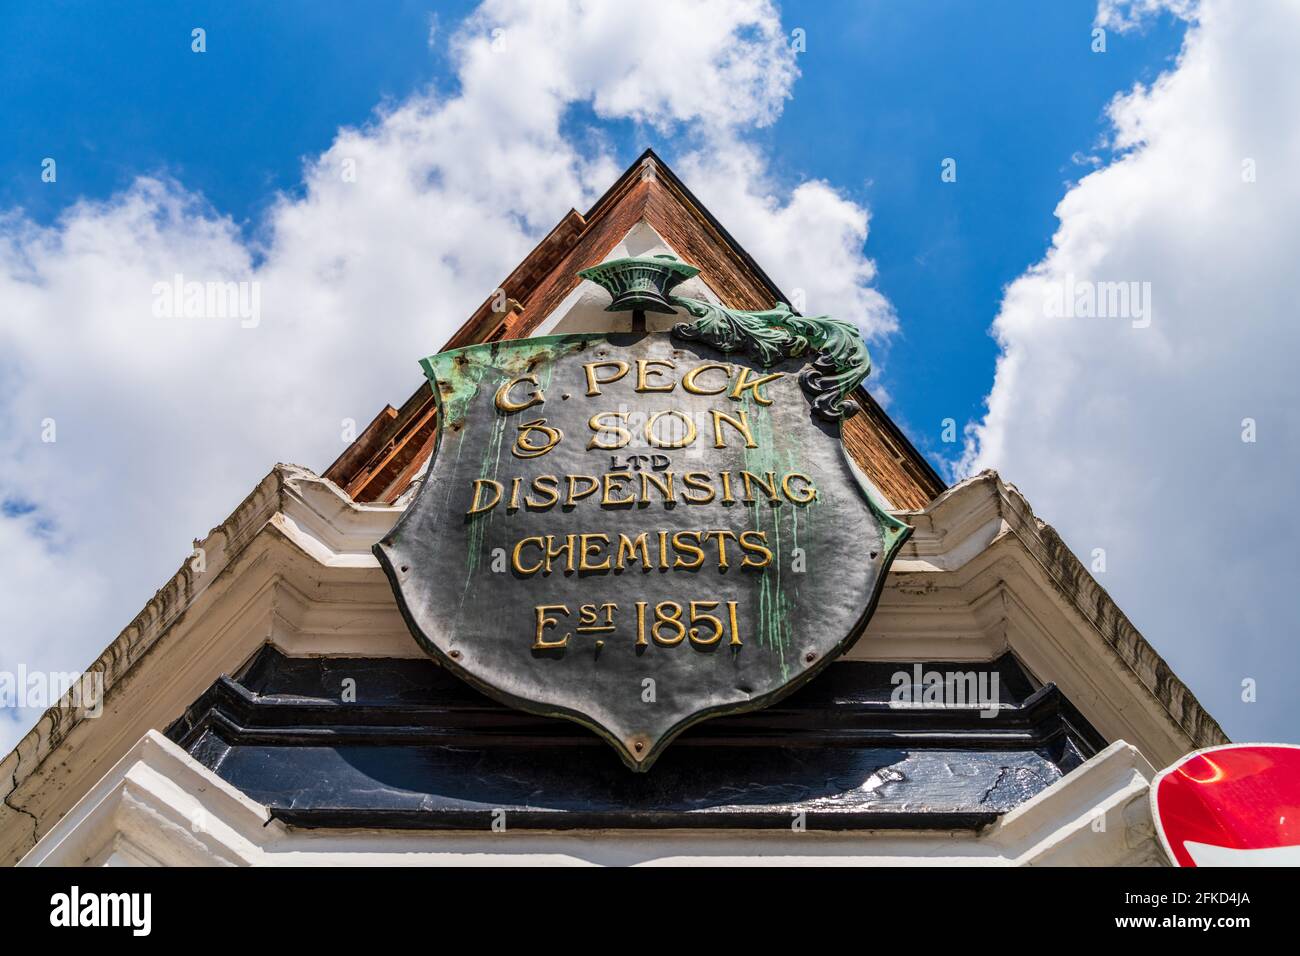 Vintage Dispensing Chemist or Pharmacy Sign Cambridge UK. G Peck & Son Dispensing Chemist Est. 1851. The building still operates as a pharmacy. Stock Photo